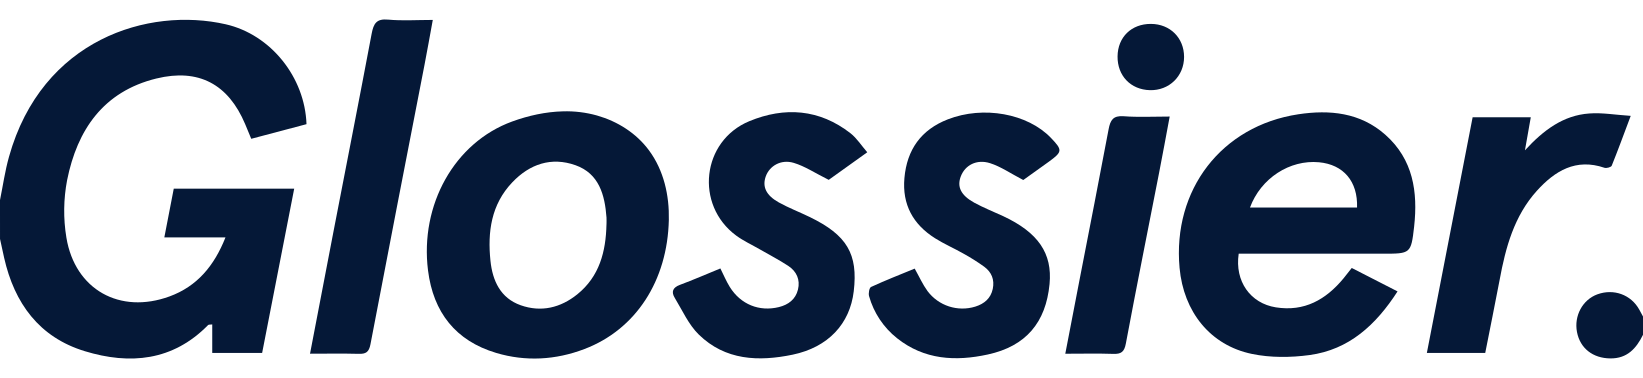 glossier-logo-navy